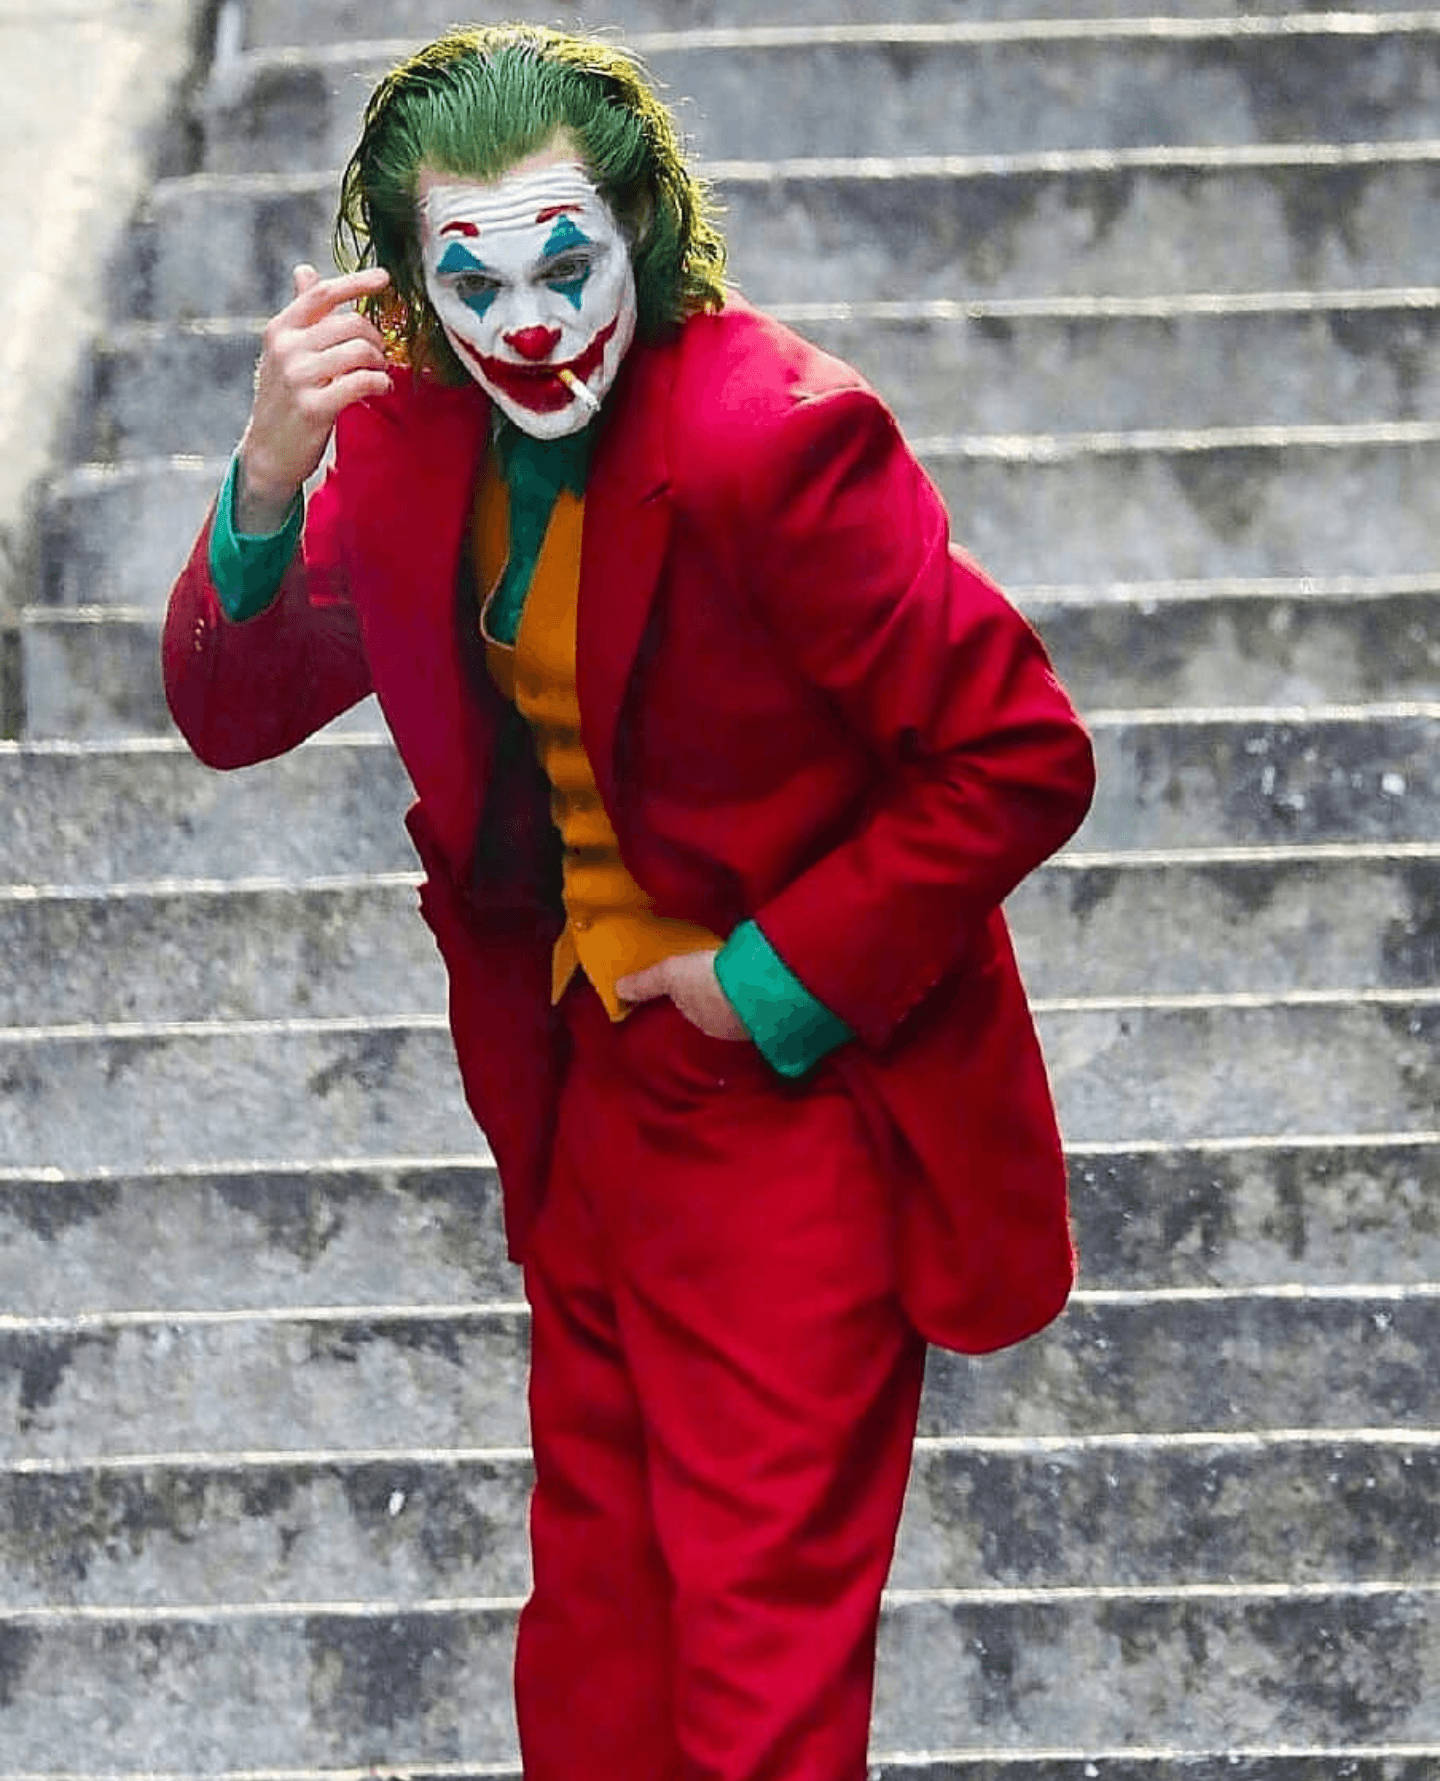 Fondode Pantalla Del Joker Fumando 2020. Fondo de pantalla